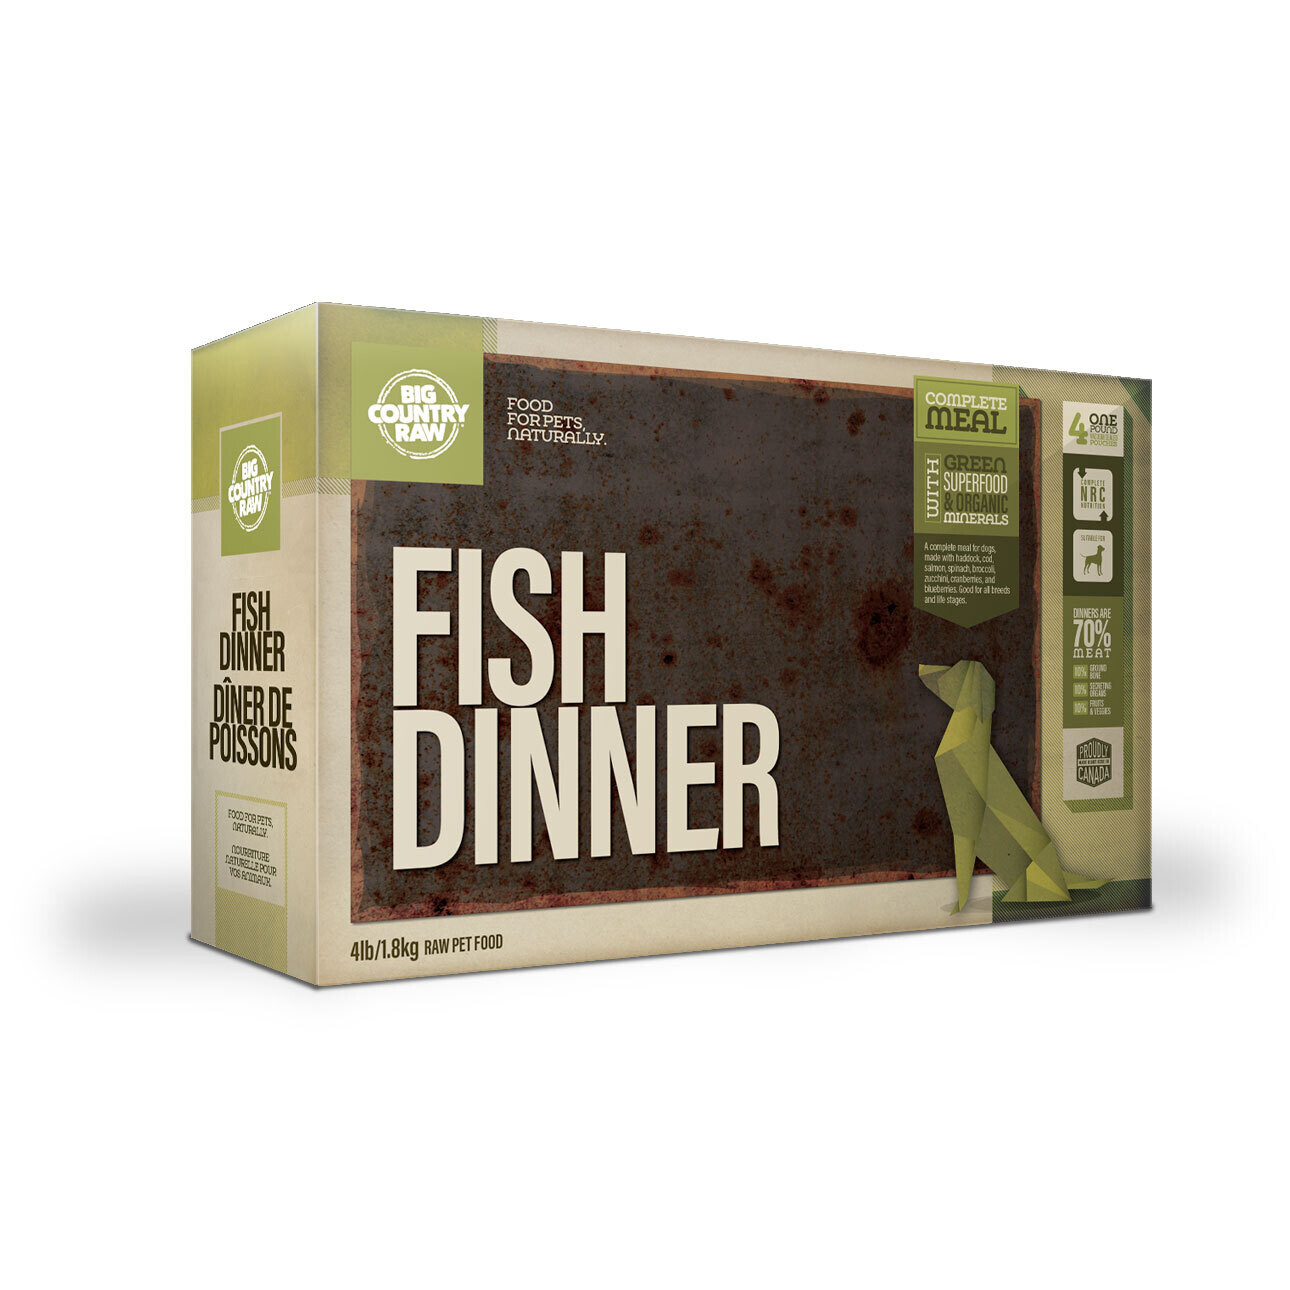 BIG COUNTRY RAW FISH DINNER 4 X 1LB